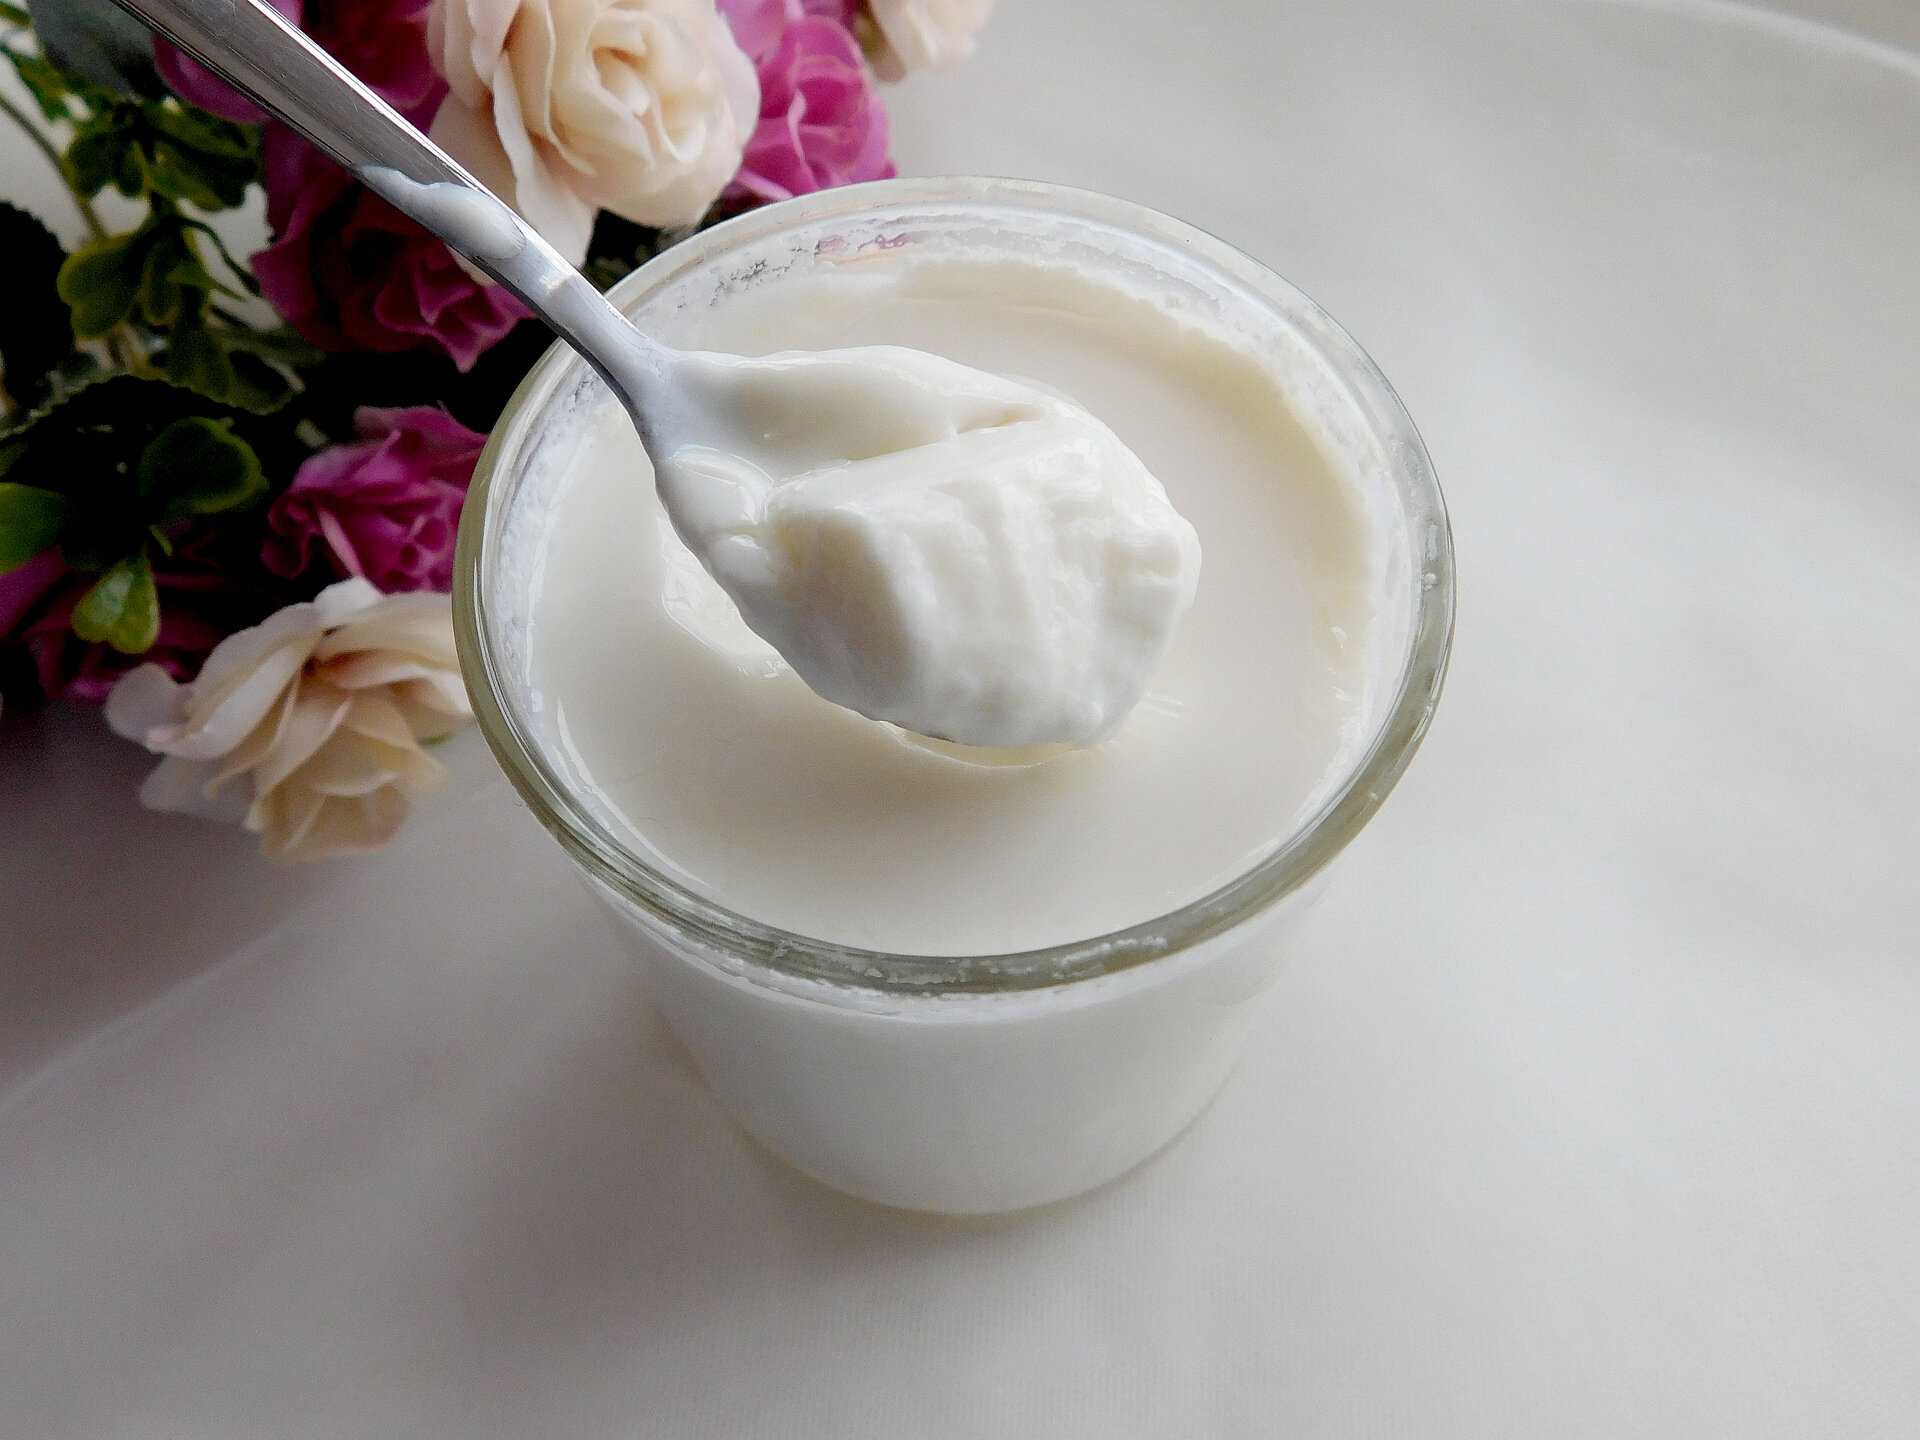 Probiotics and Health: Benefits of Organic Kefir and Natural Yogurt